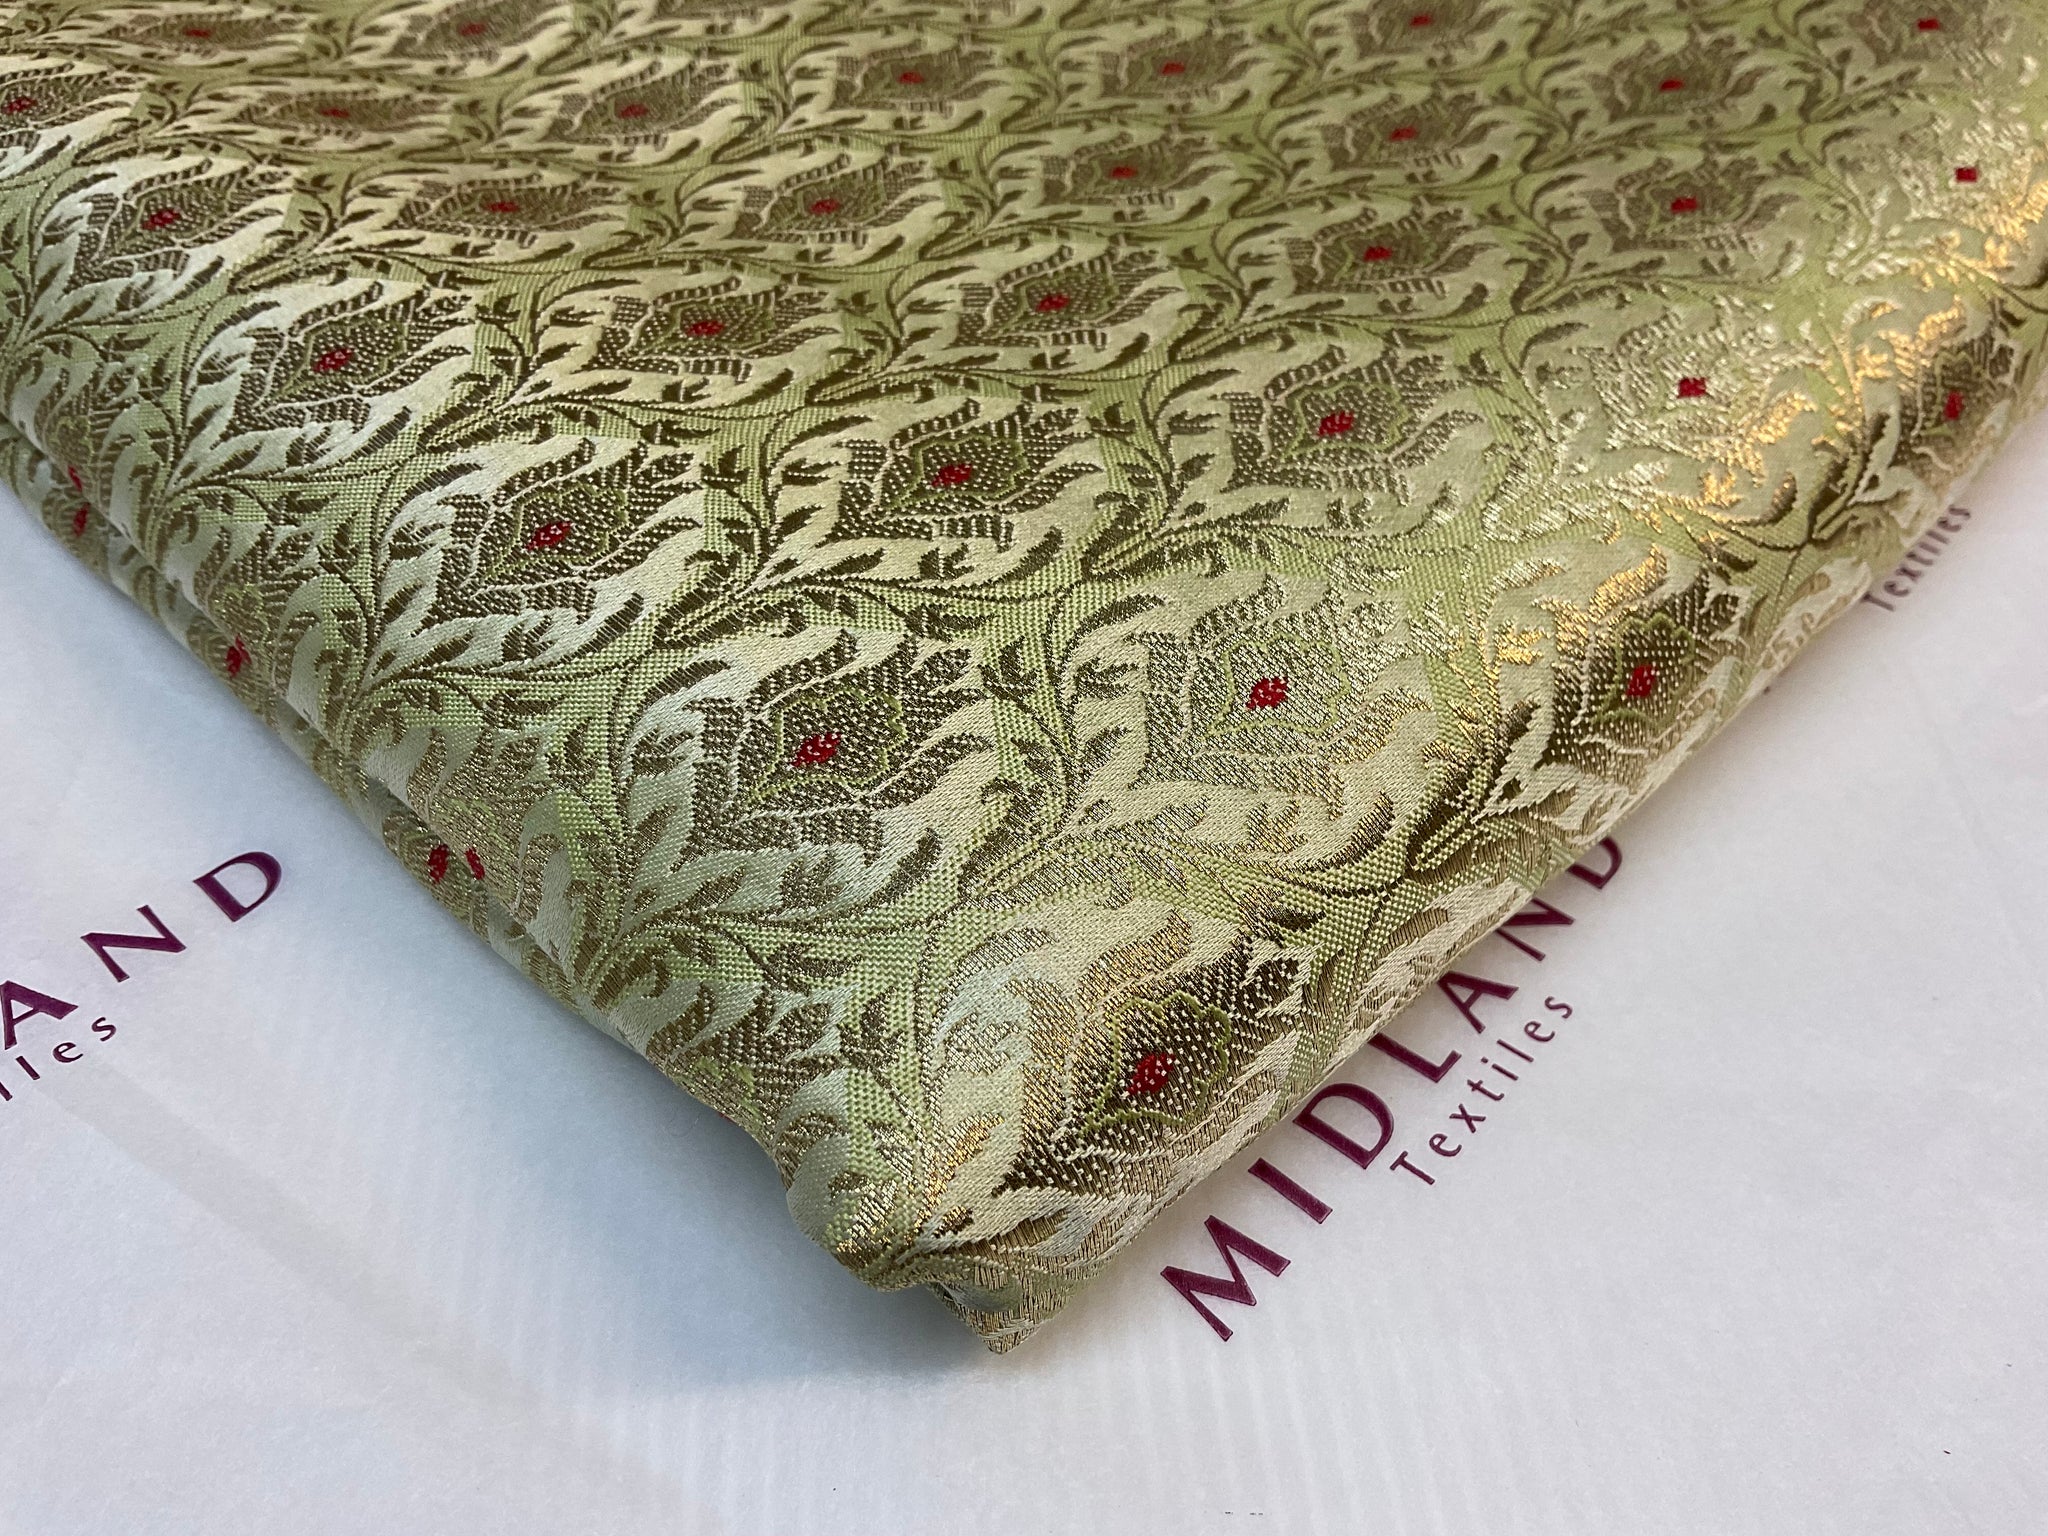 Indian Floral wedding Banarsi Brocade Fabric 114cm wide M1775